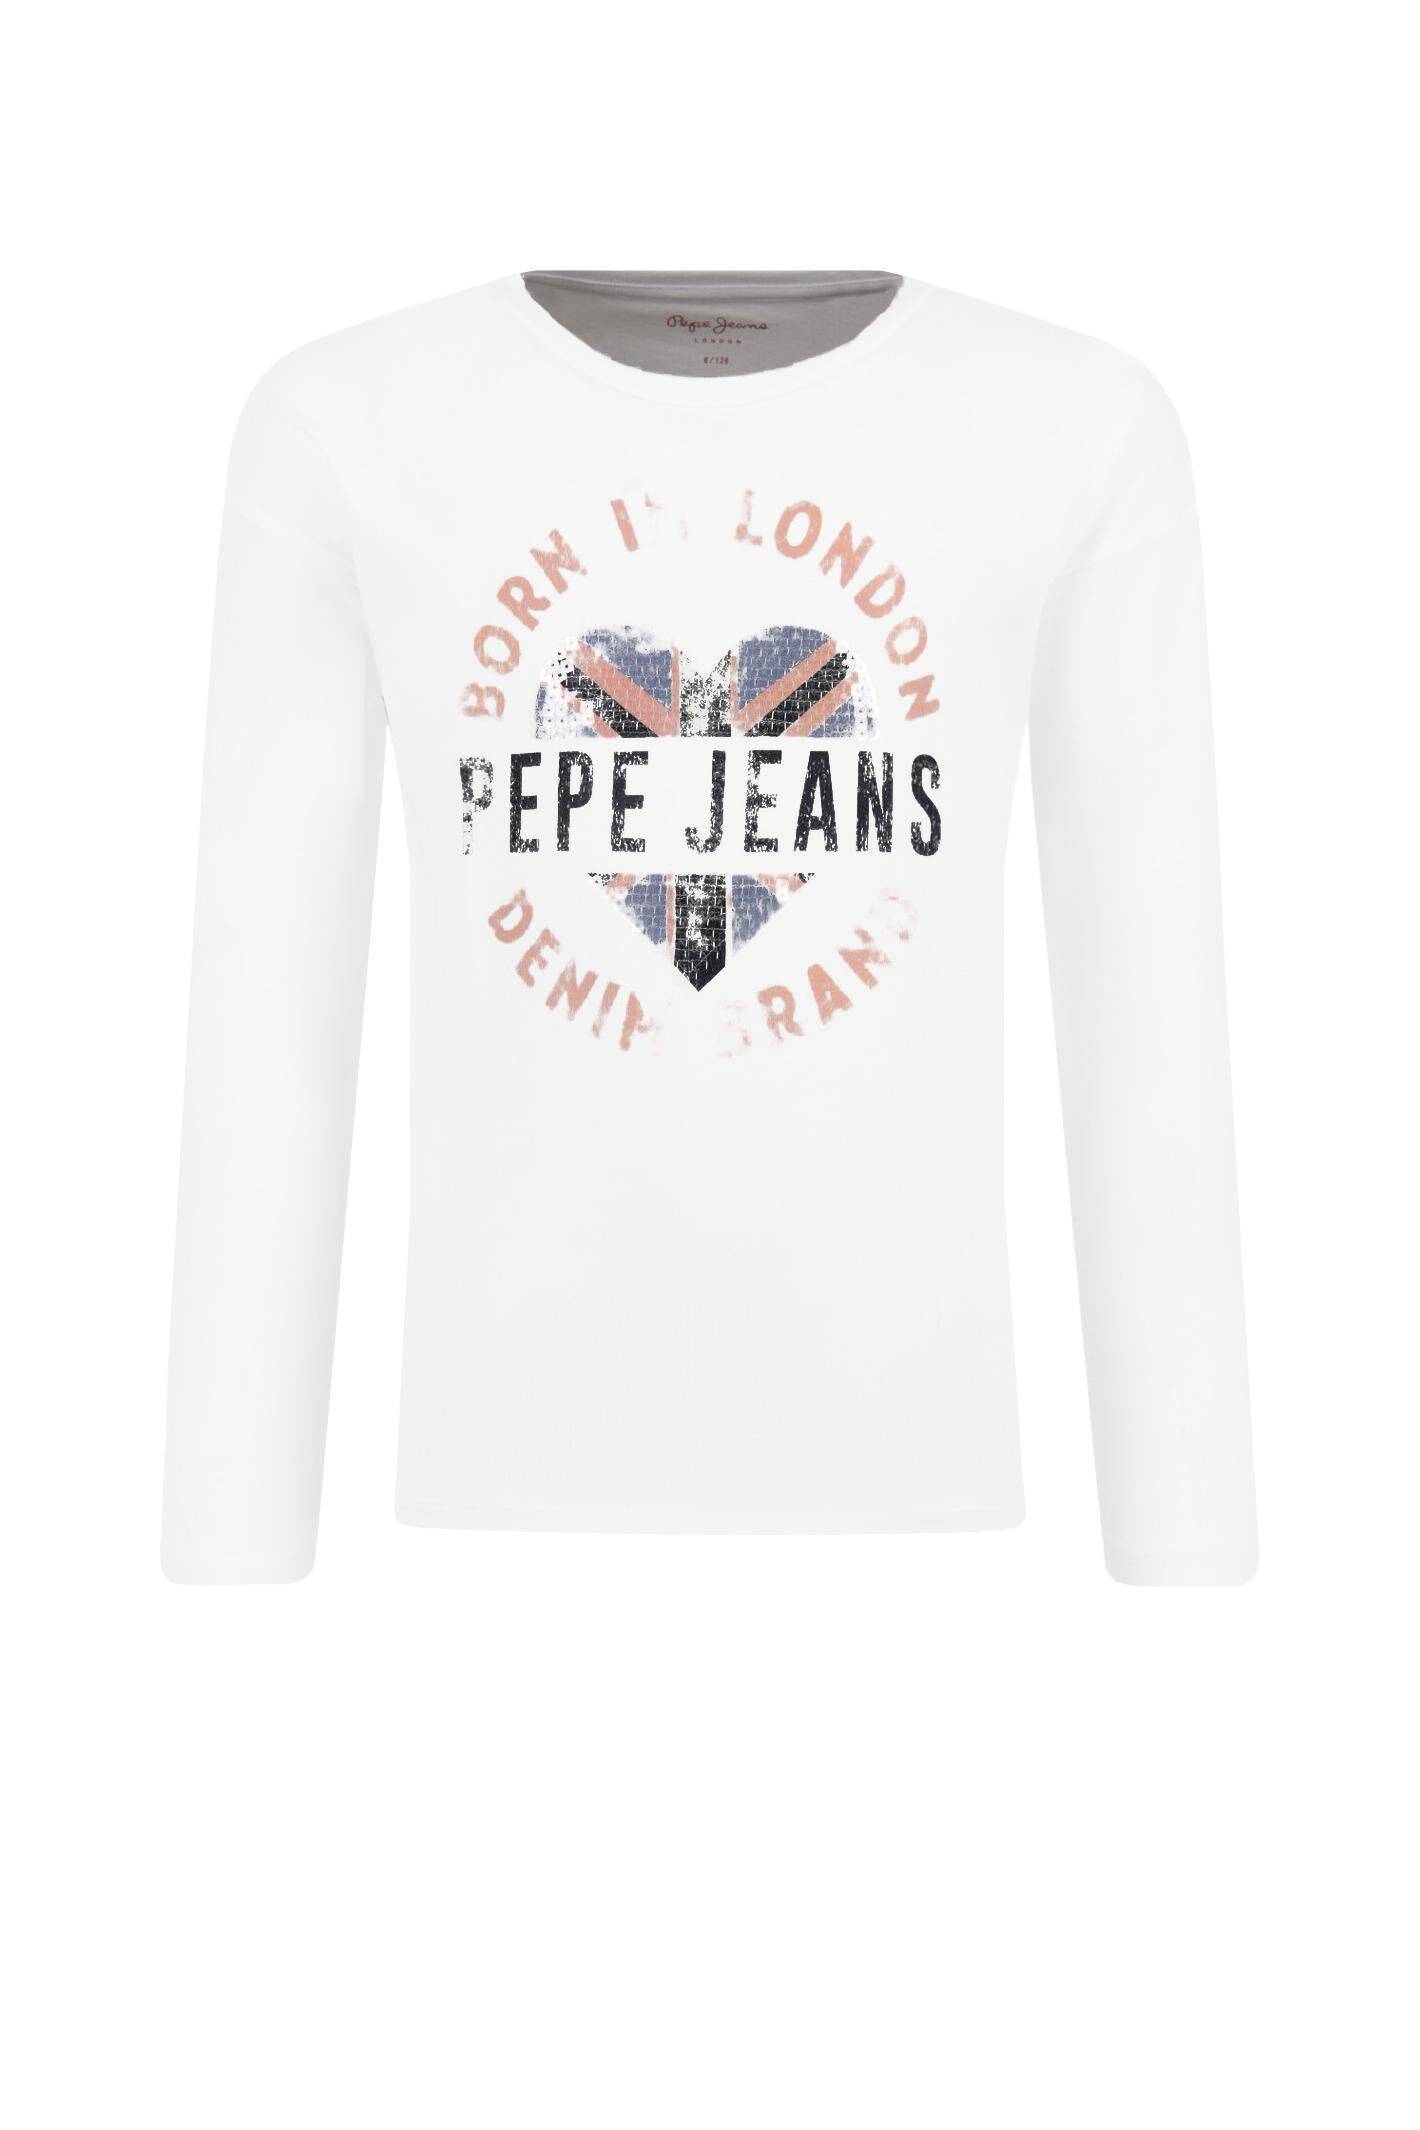 Pepe Jeans Alejandra PG502205 T-Shirt Fille